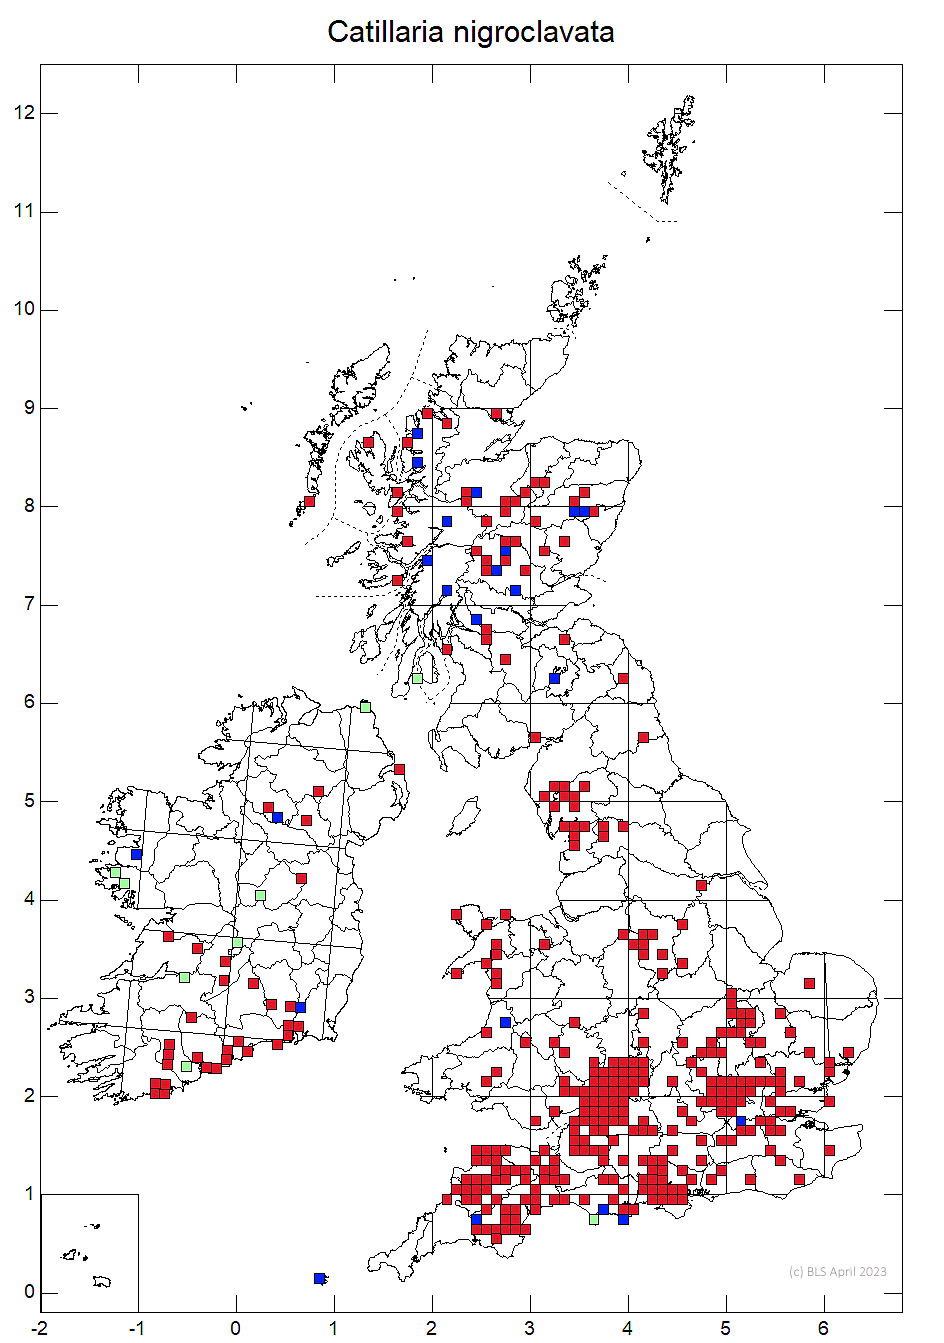 Catillaria nigroclavata 10km sq distribution map